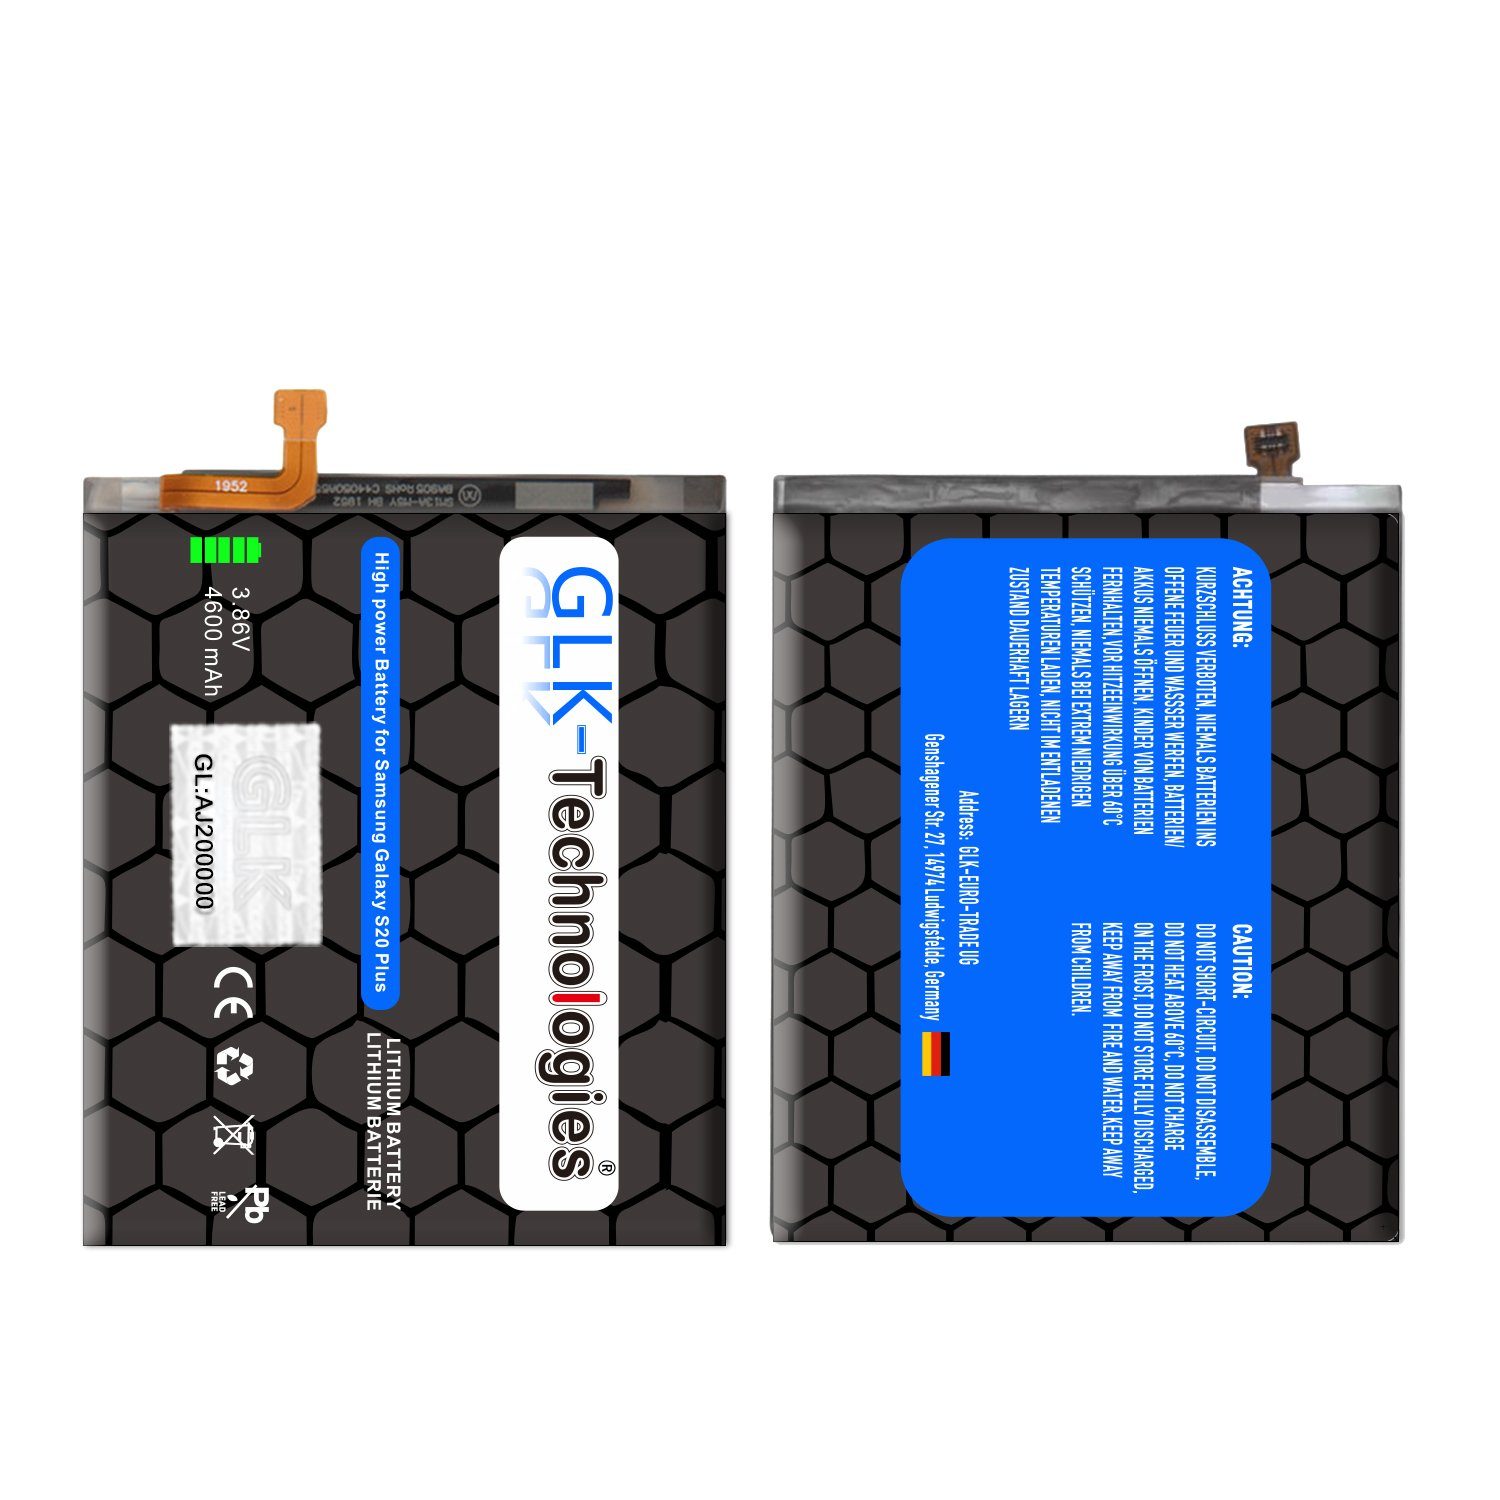 GLK-Technologies High Power Ersatzakku Batterie kompatibel (3.86 Galaxy 5G Samsung 4600 mit Ohne Set Akku S20 Battery G985F V) GLK-Technologies EB-BG985ABY Original Plus G986B Handy-Akku mAh